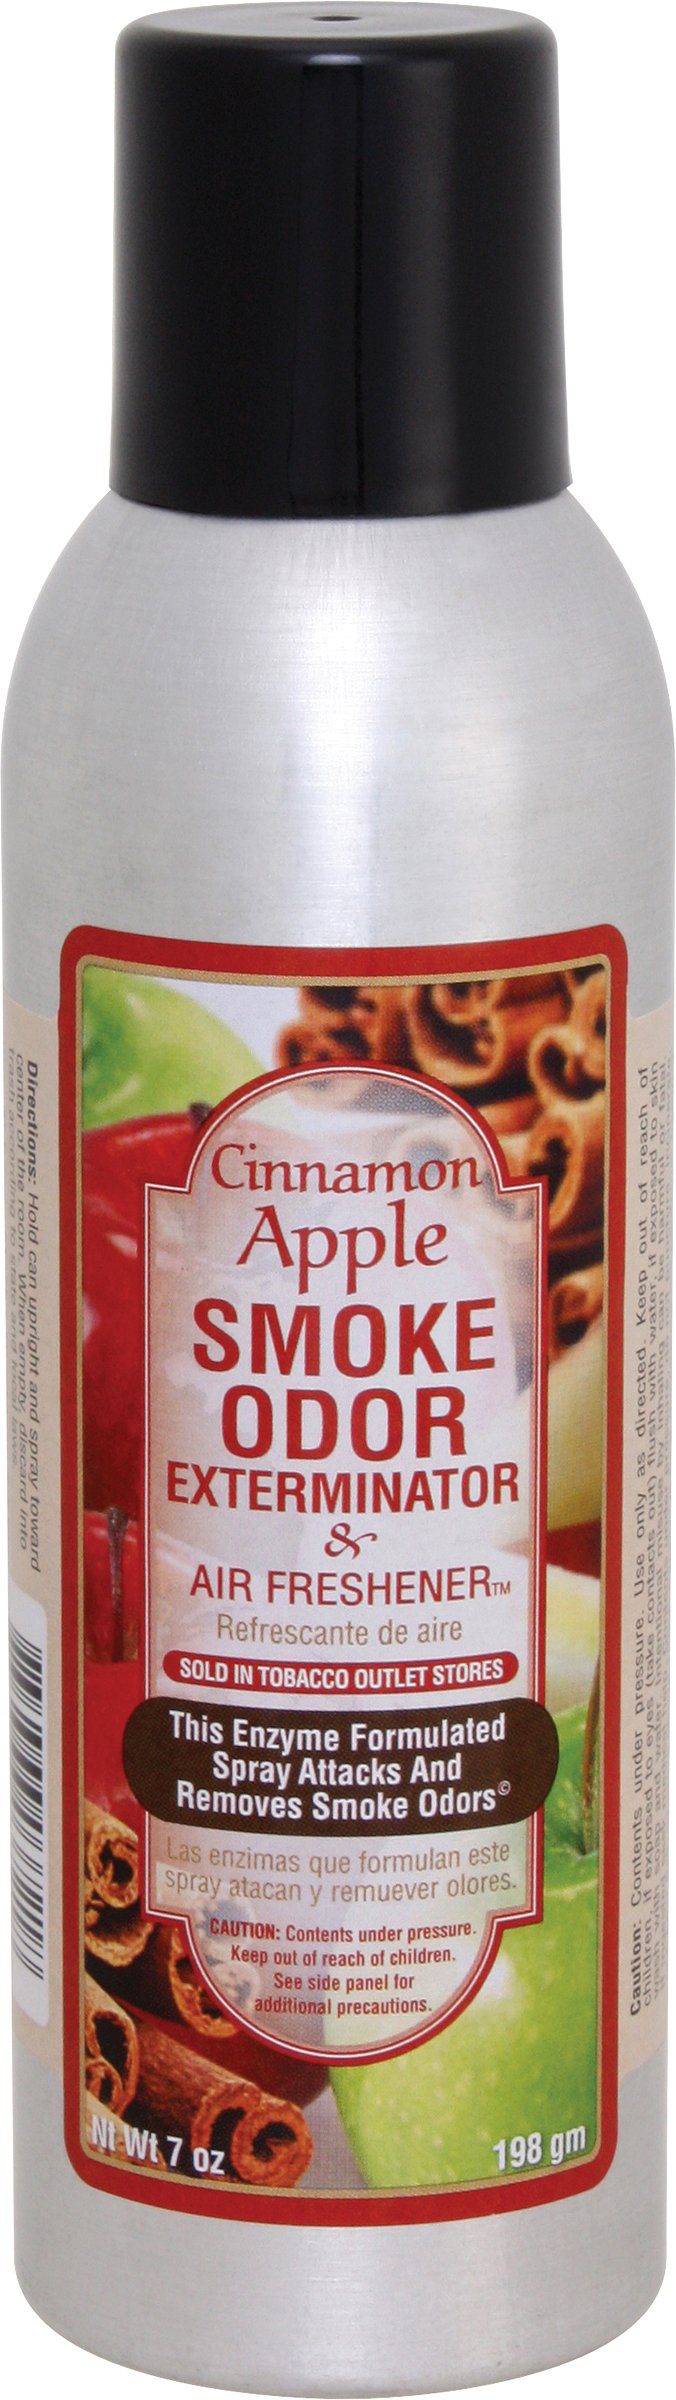 smoke odor exterminator spray bottle cinnamon apple